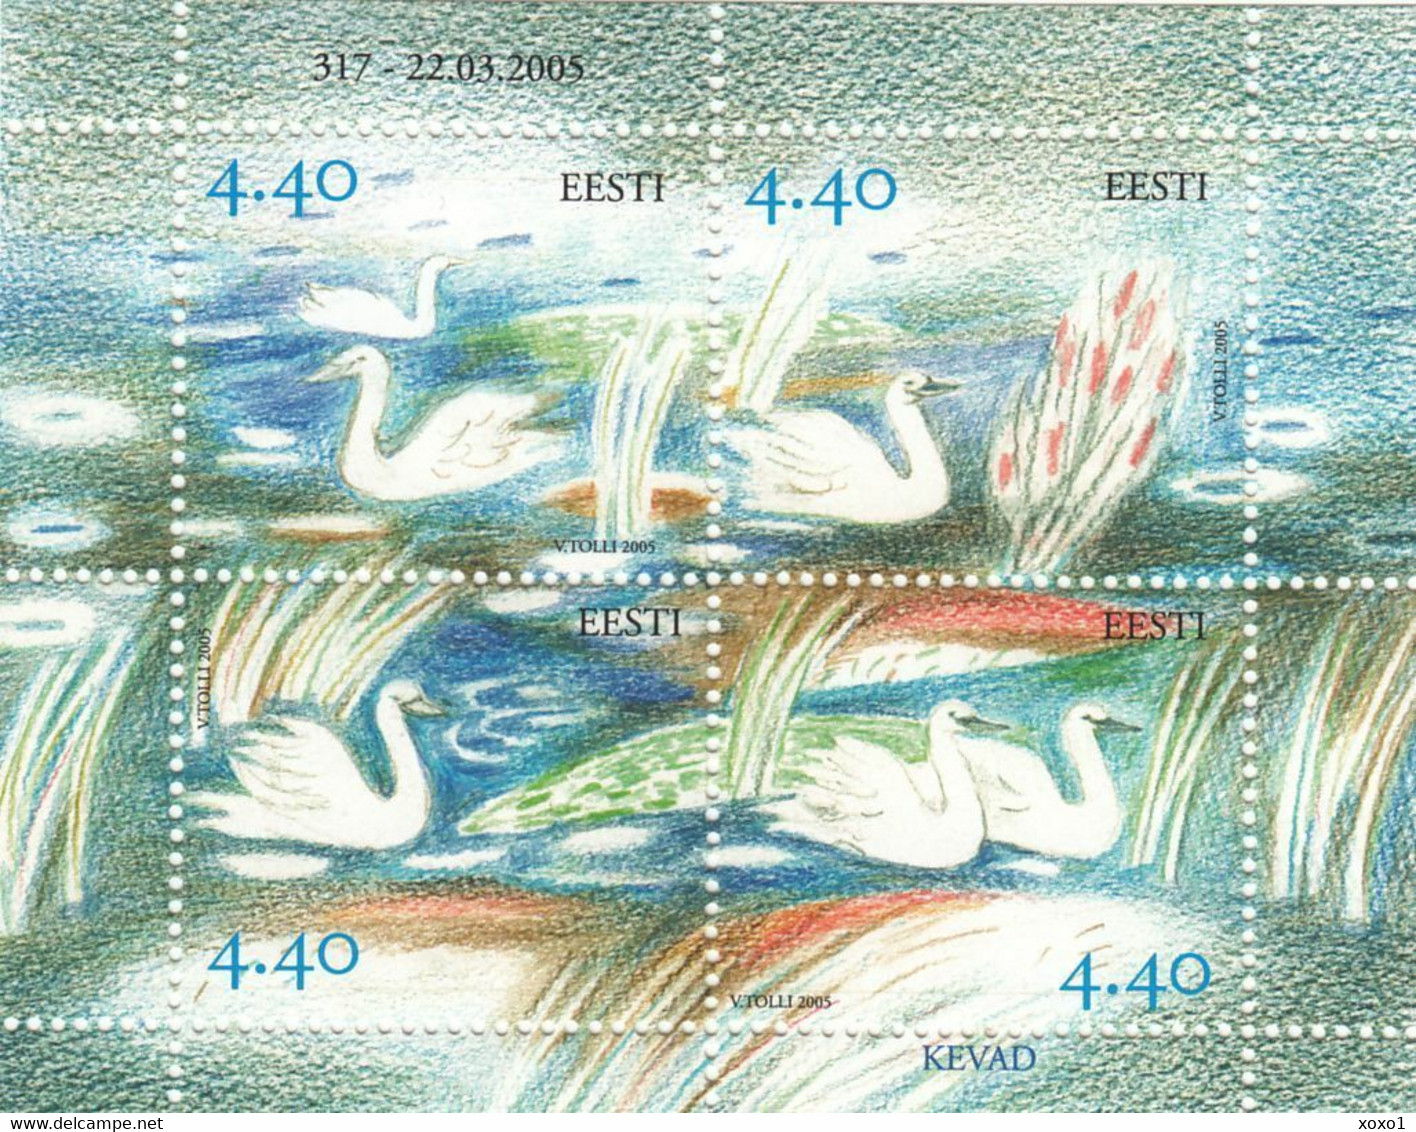 Estonia 2005 MiNr. 509 - 512(Block 22) Estland Birds Mute Swans Seasons Spring 1 S/sh MNH** 2.80 € - Cygnes